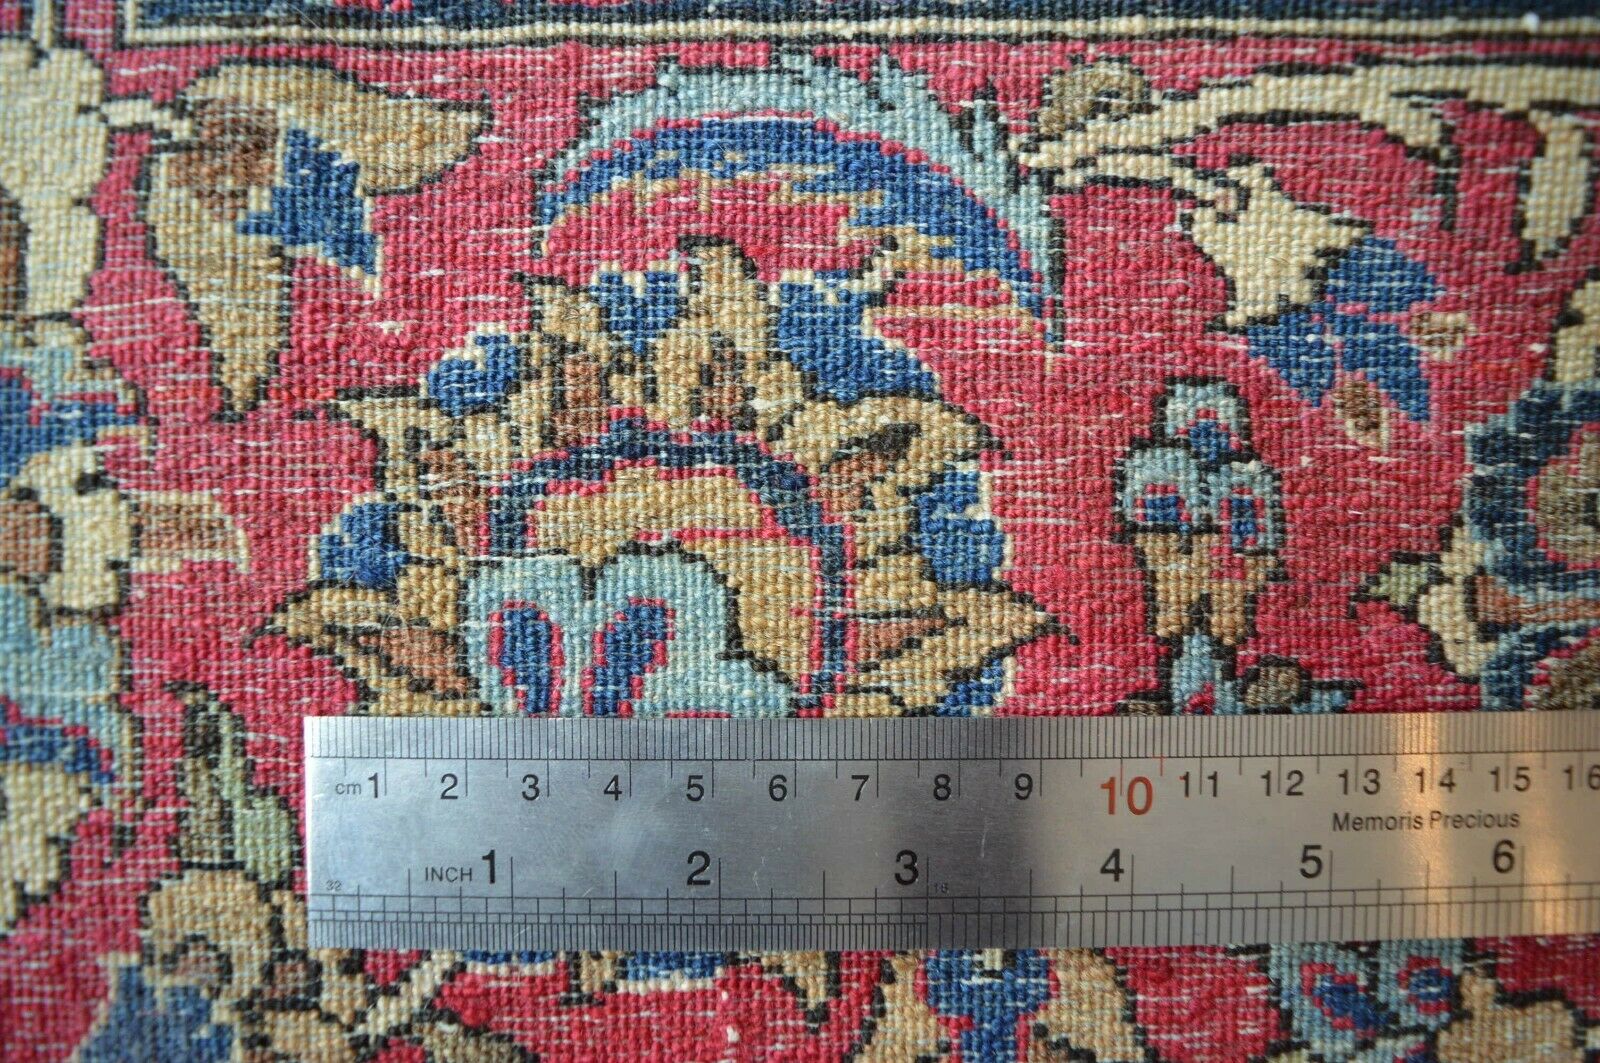 Antik! Isfahan 210x140 Esfahan Carpet Rug Antique Tapis Perser Orientteppich